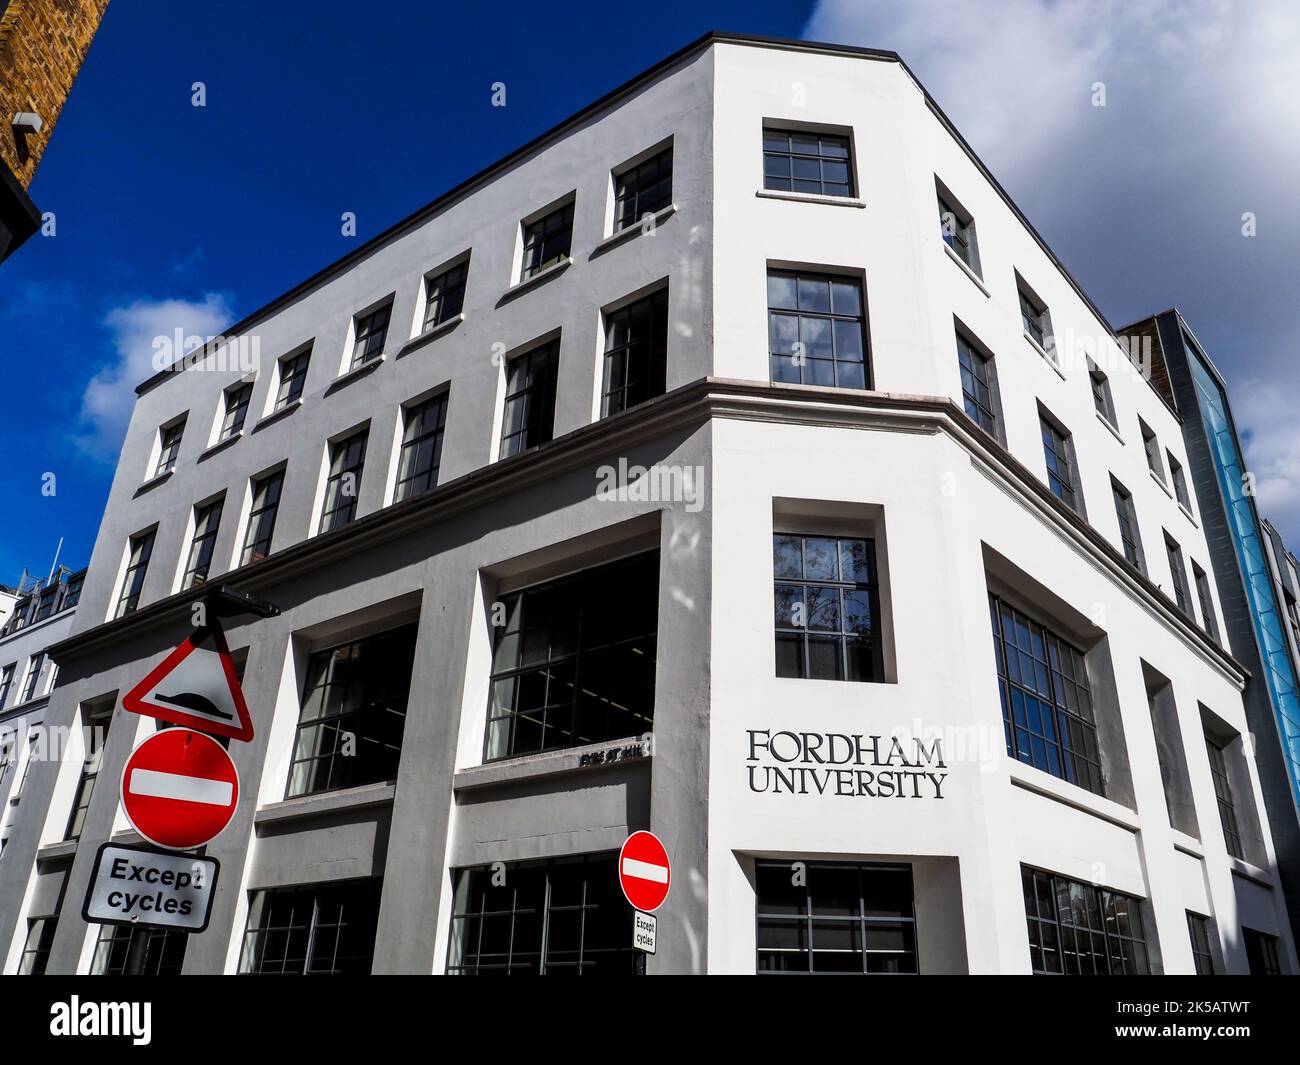 Fordham University London - Fordham University opened in London in 2002 & moved into the Fordham University London Centre at 2 Eyre St Hill in 2018. Stock Photo